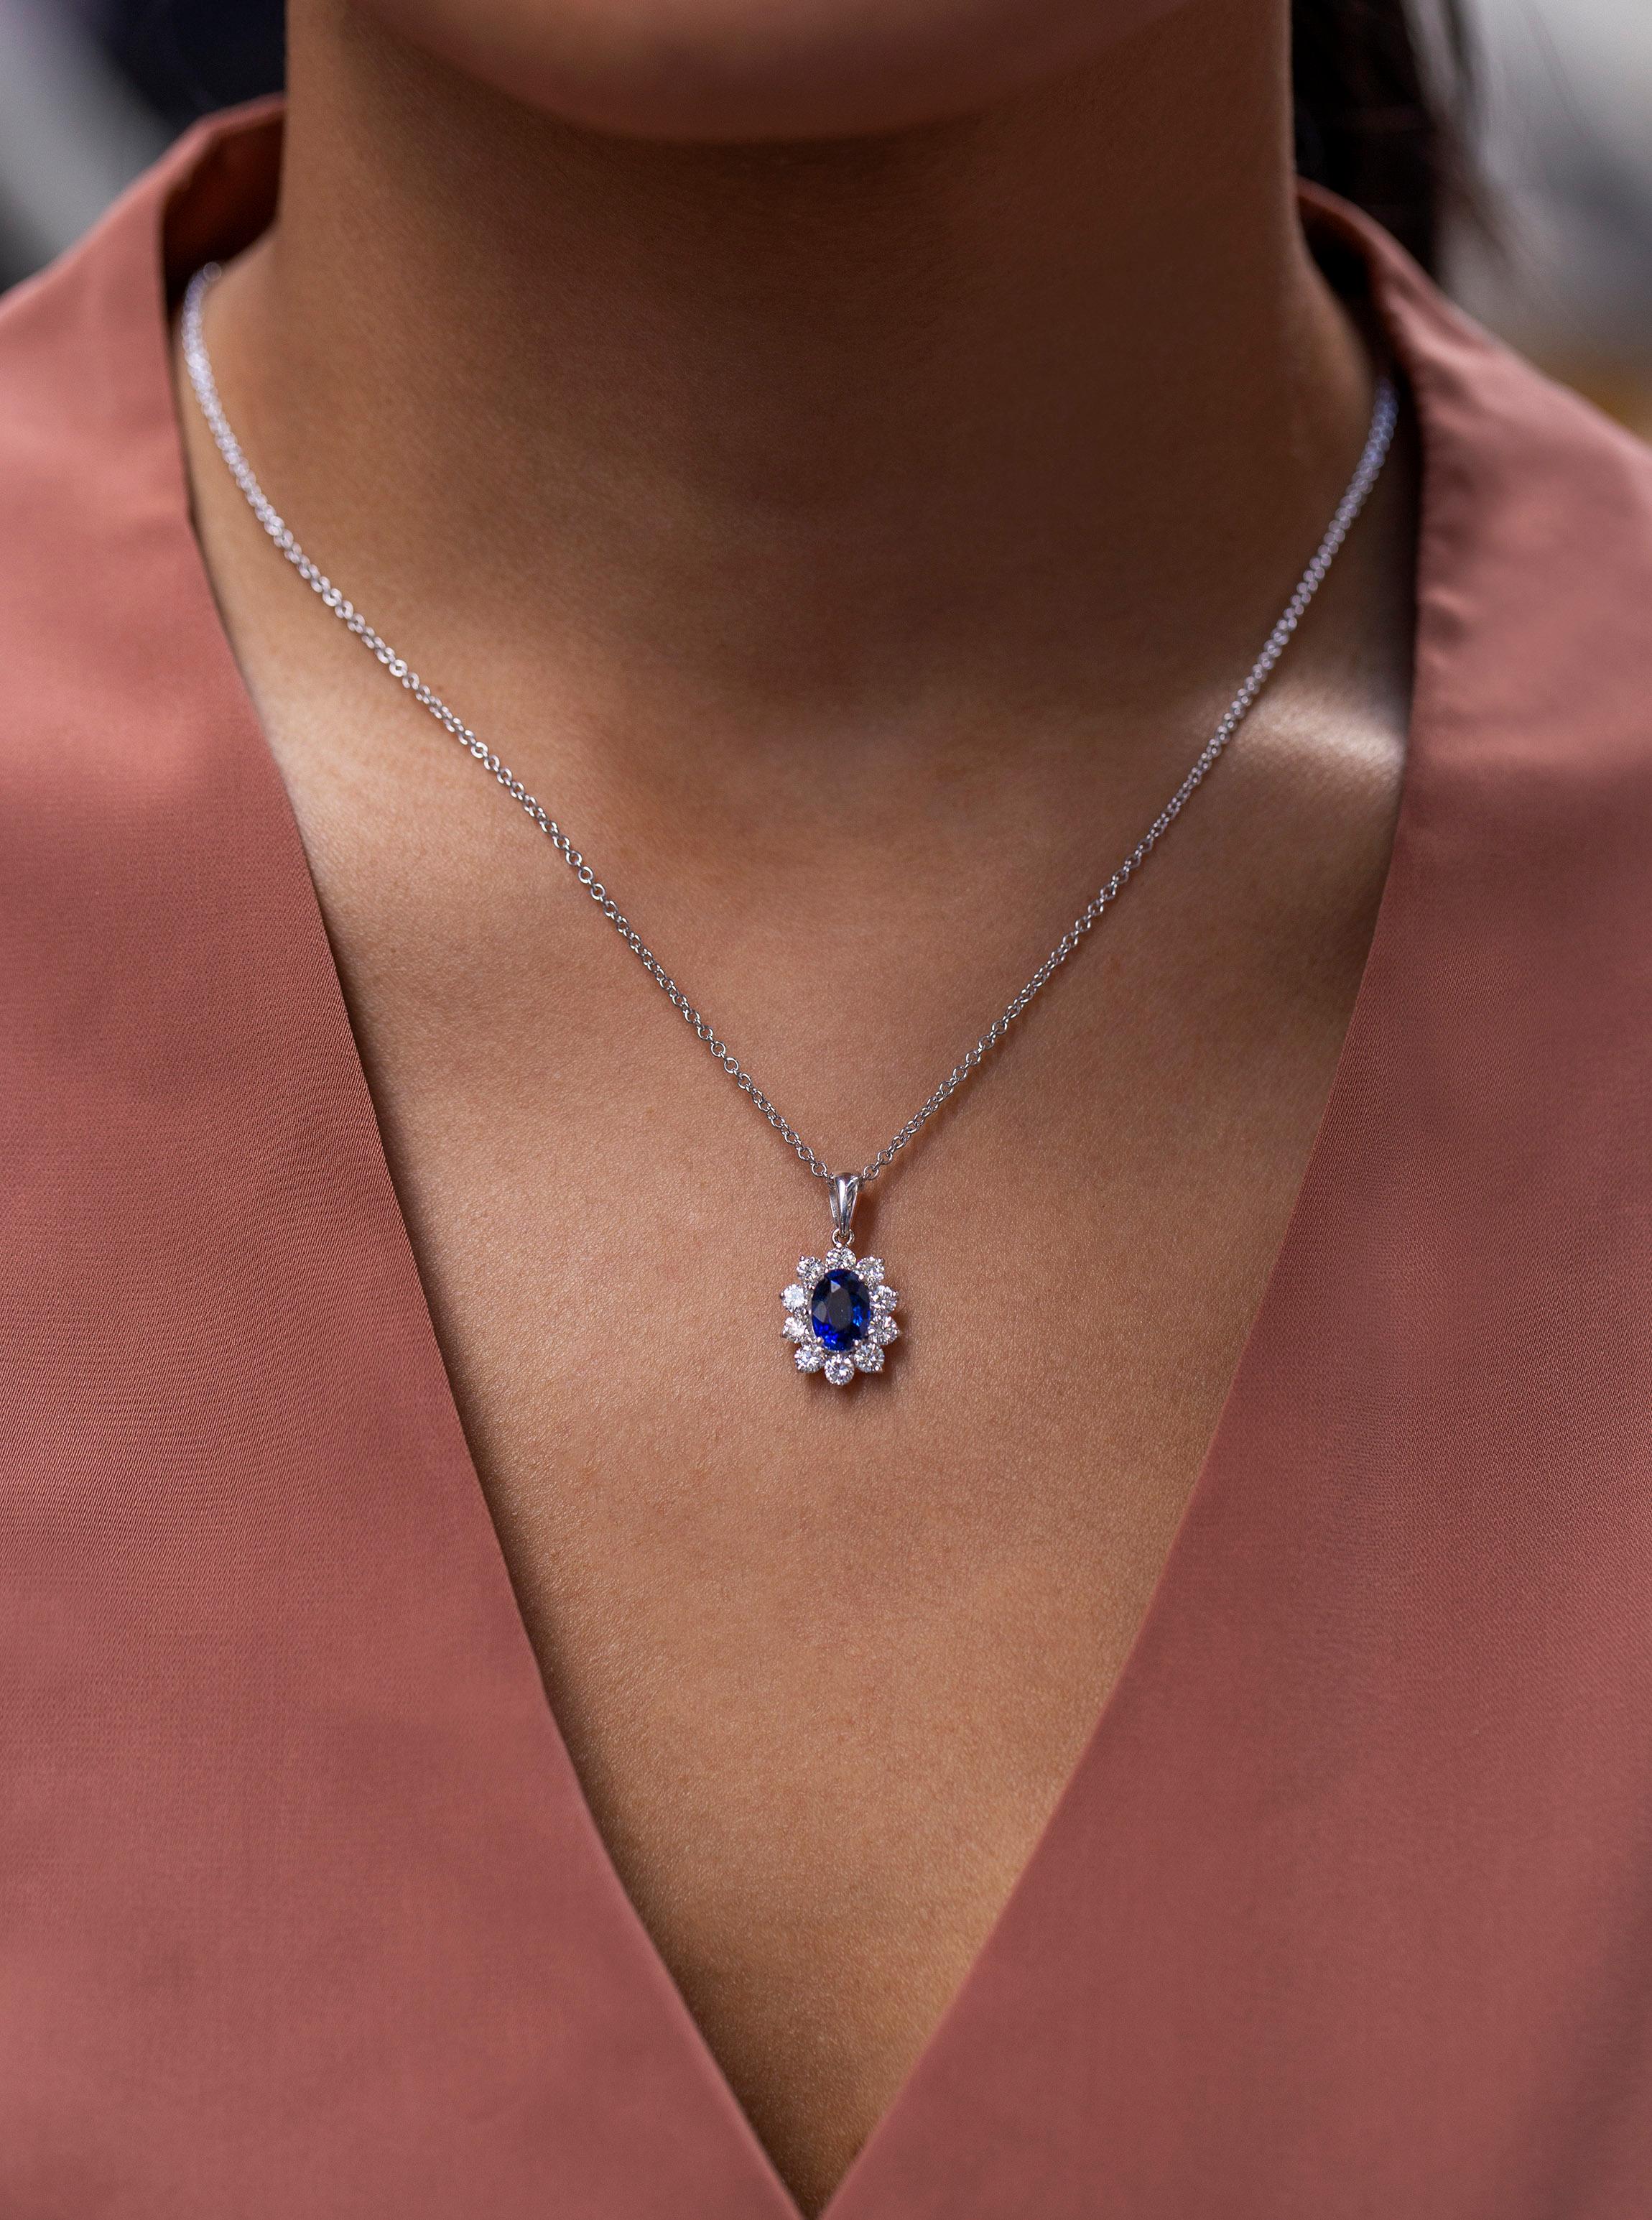 Oval Cut Roman Malakov 1.90 Carat Blue Sapphire and Diamond Pendant Necklace For Sale